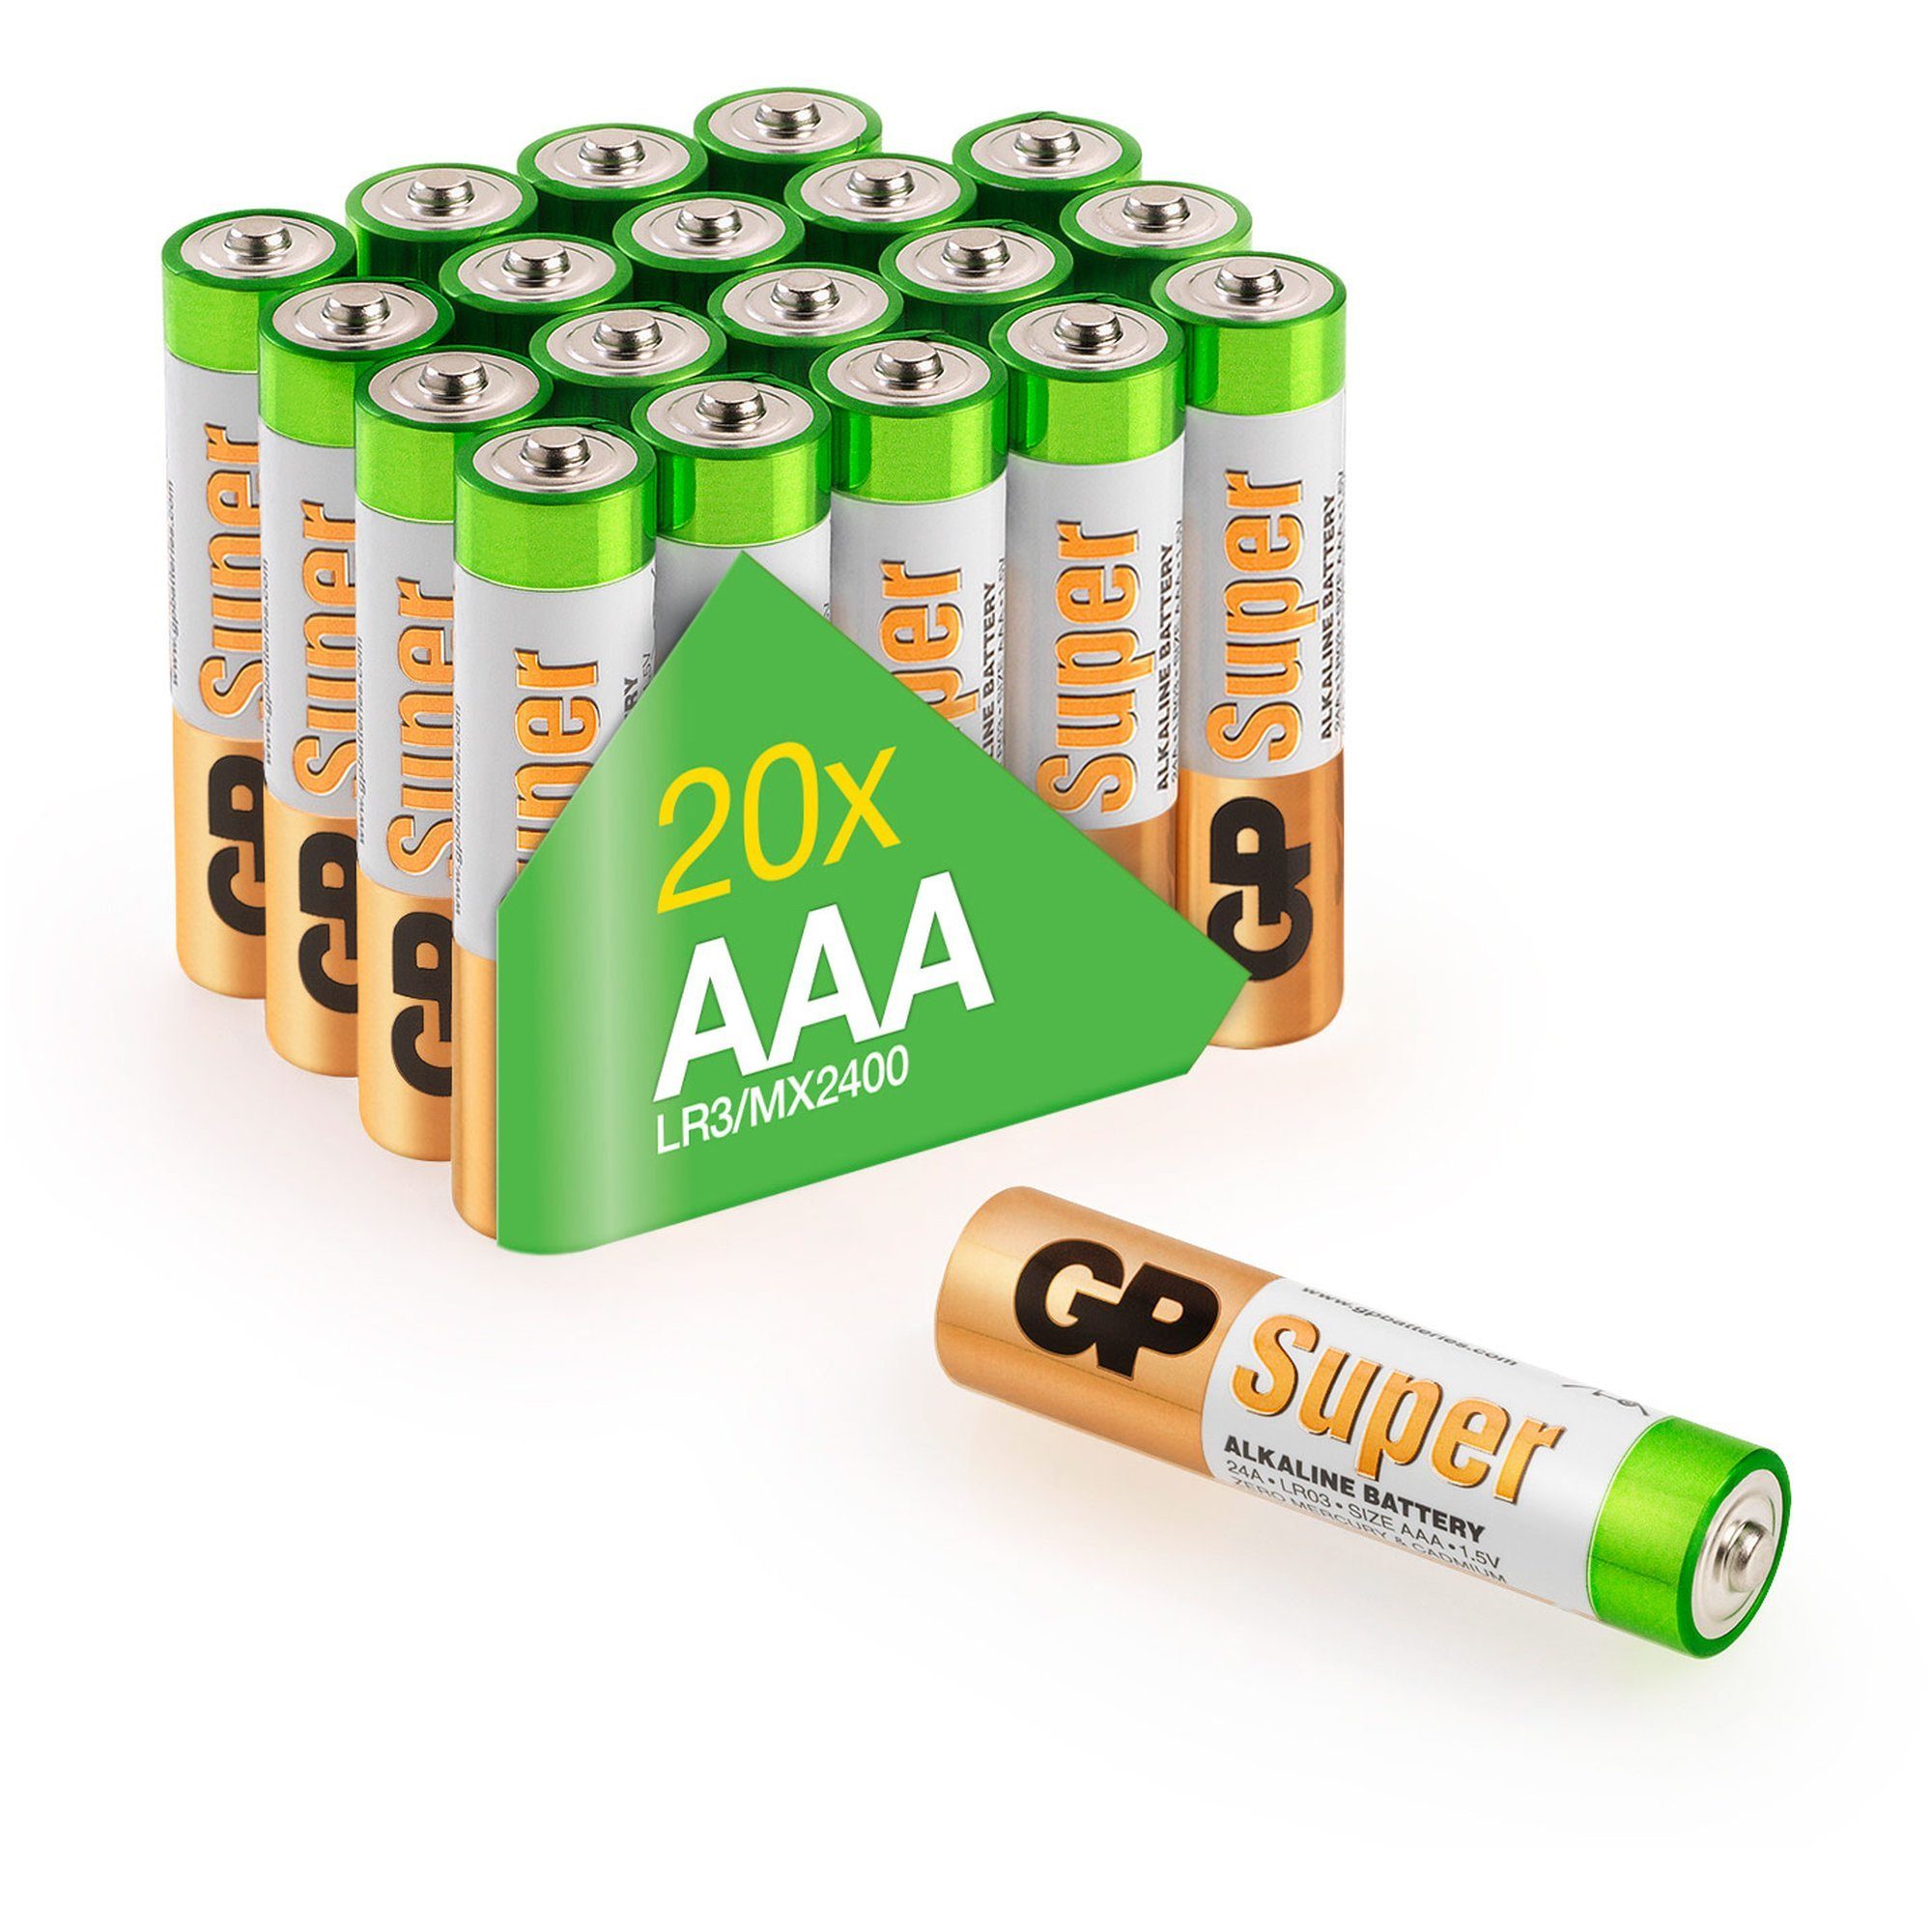 GP Batteries AAA Micro Batterie GP Alkaline Super 1,5V 20 Stück Batterie, (1,5 V) | Batterien